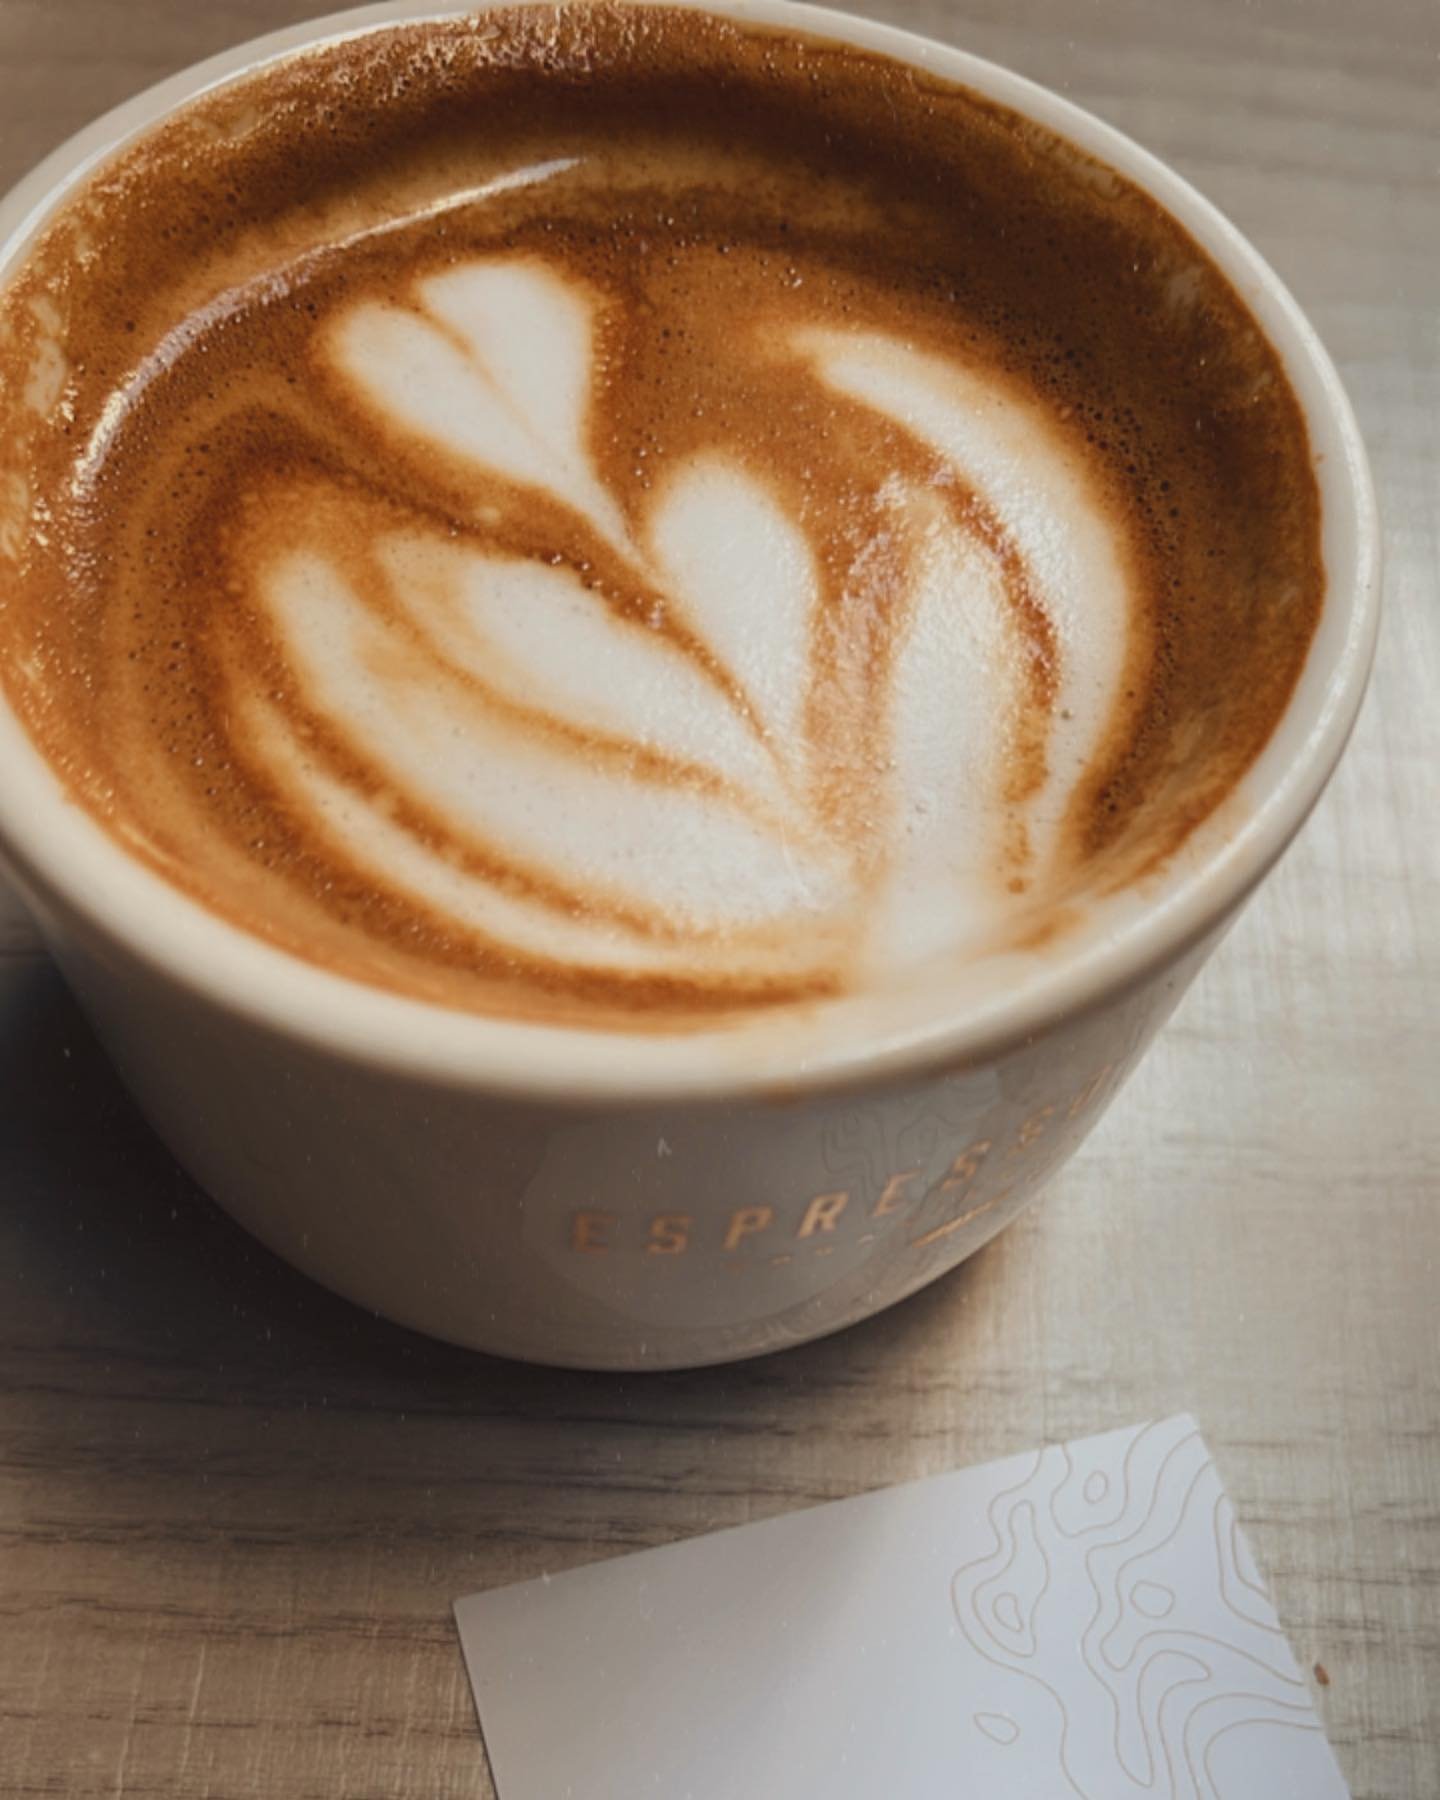 Mondays first sip. Is there a better way to start the week?
.
.
.

.

espresso #espressomafia #espressomafiagirona #cyclecafe #girona #coffee #cafe #coolcafe #caffeineaddict #jersey #bikejersey #specialtycoffee #dirtychai #latte #rosetta #latteart #c